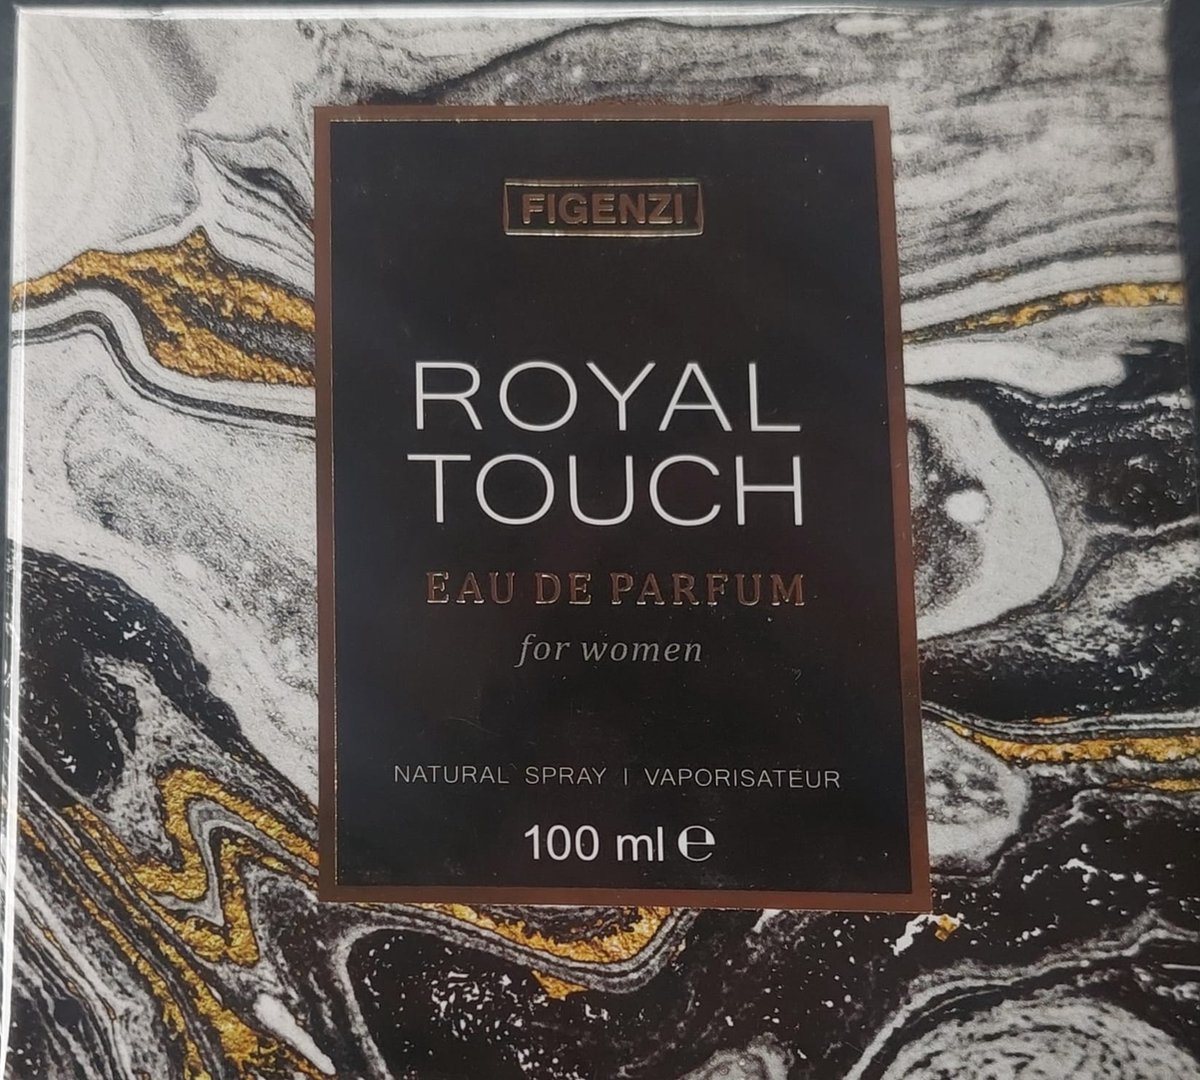 FIGENZI royal touch Edp 100 ml-parfum-natuurlijke spray.